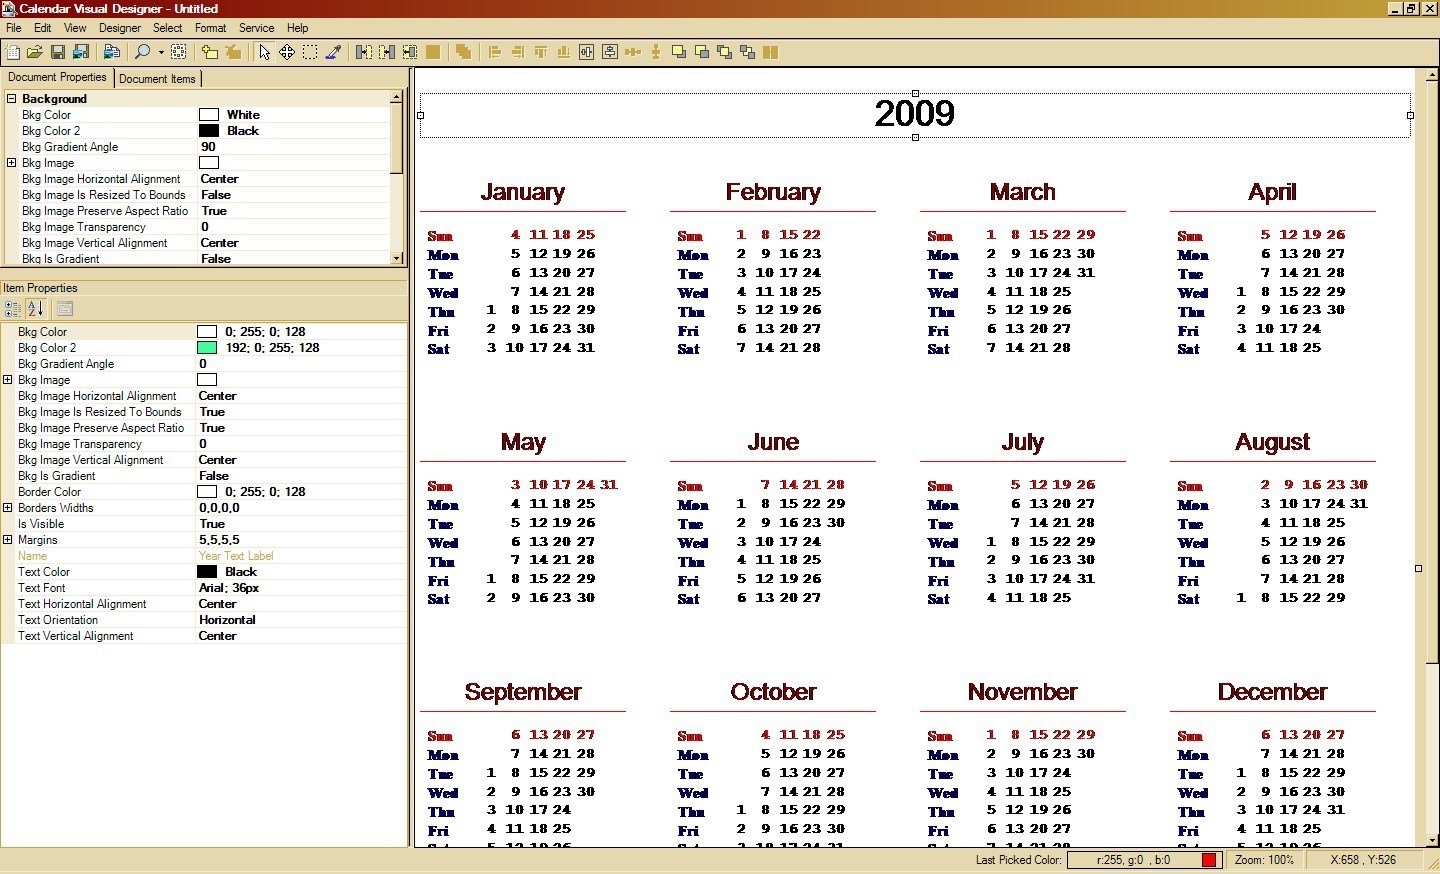 Calendar Visual Designer 1.2 : Calendar properties